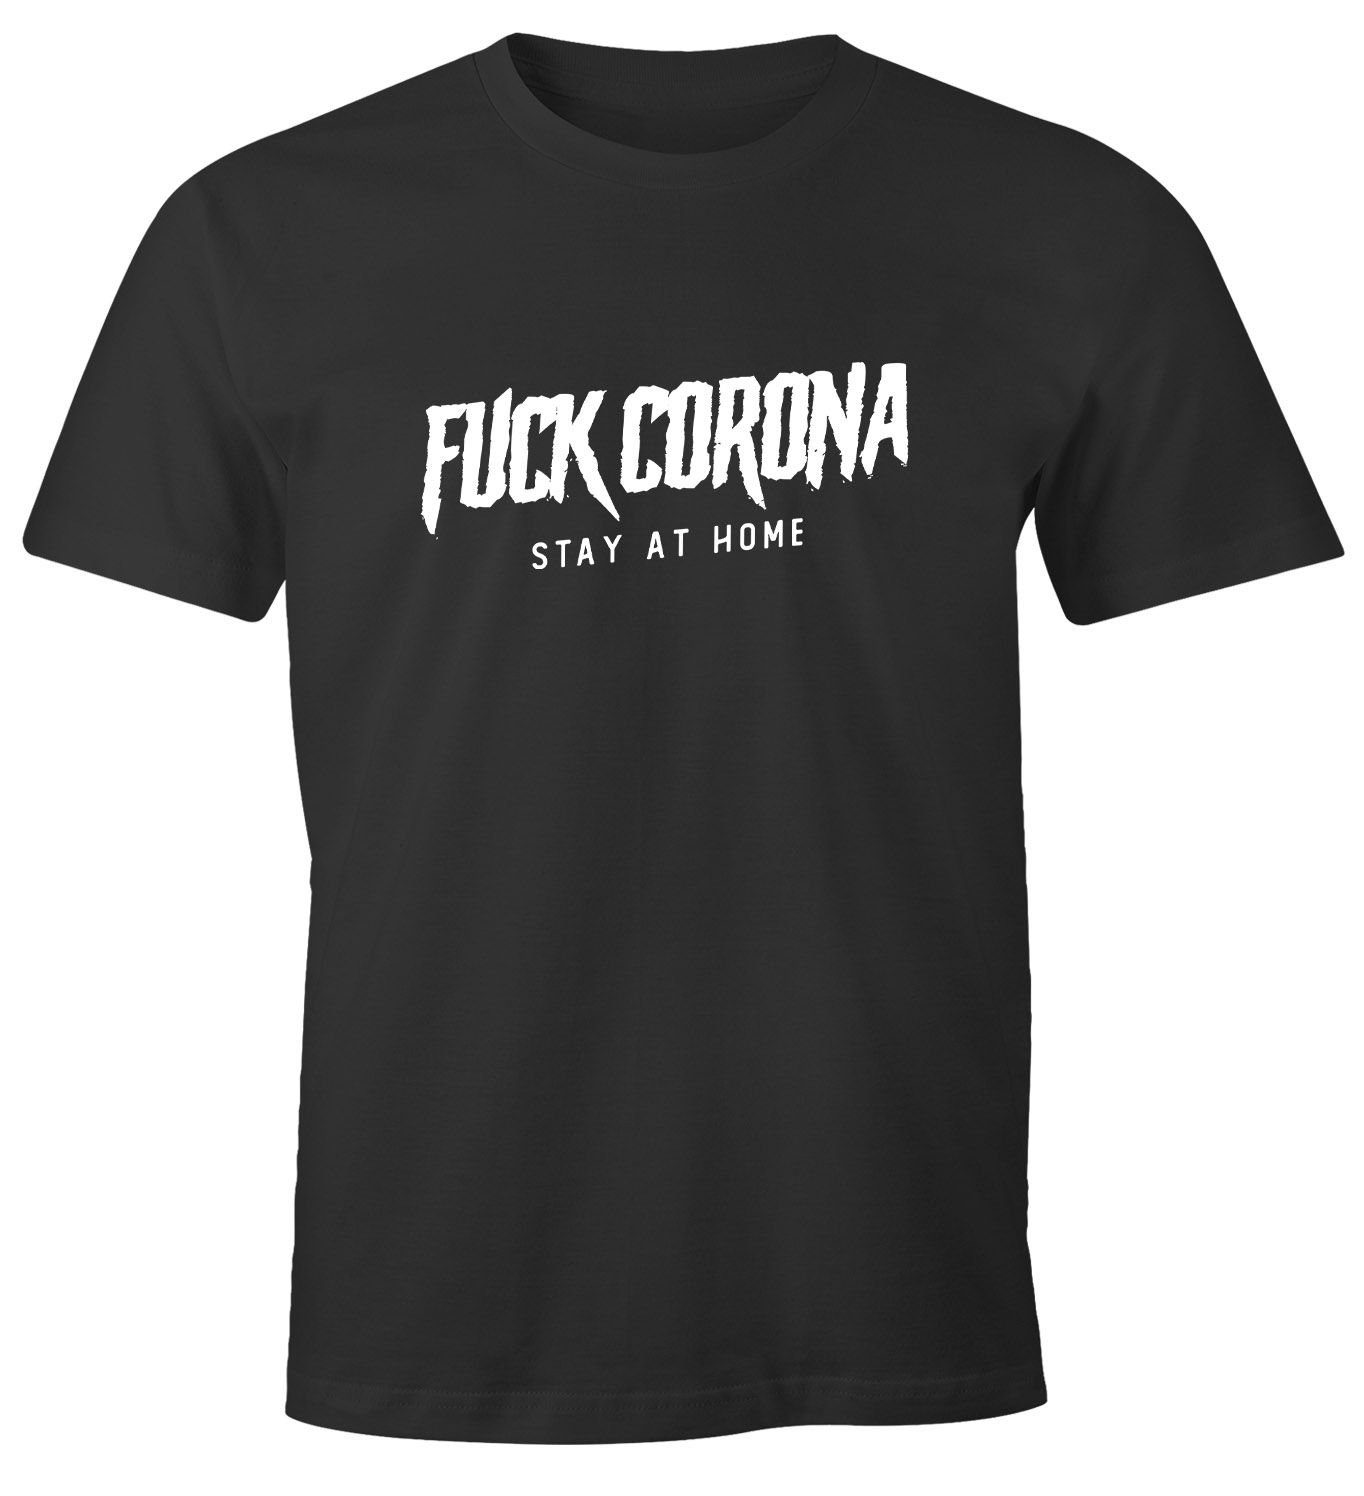 MoonWorks Print-Shirt Herren Fuck the curve Aufruf T-Shirt Flatten at Corona Statement Appell home Moonworks® mit Botschaft stay Print